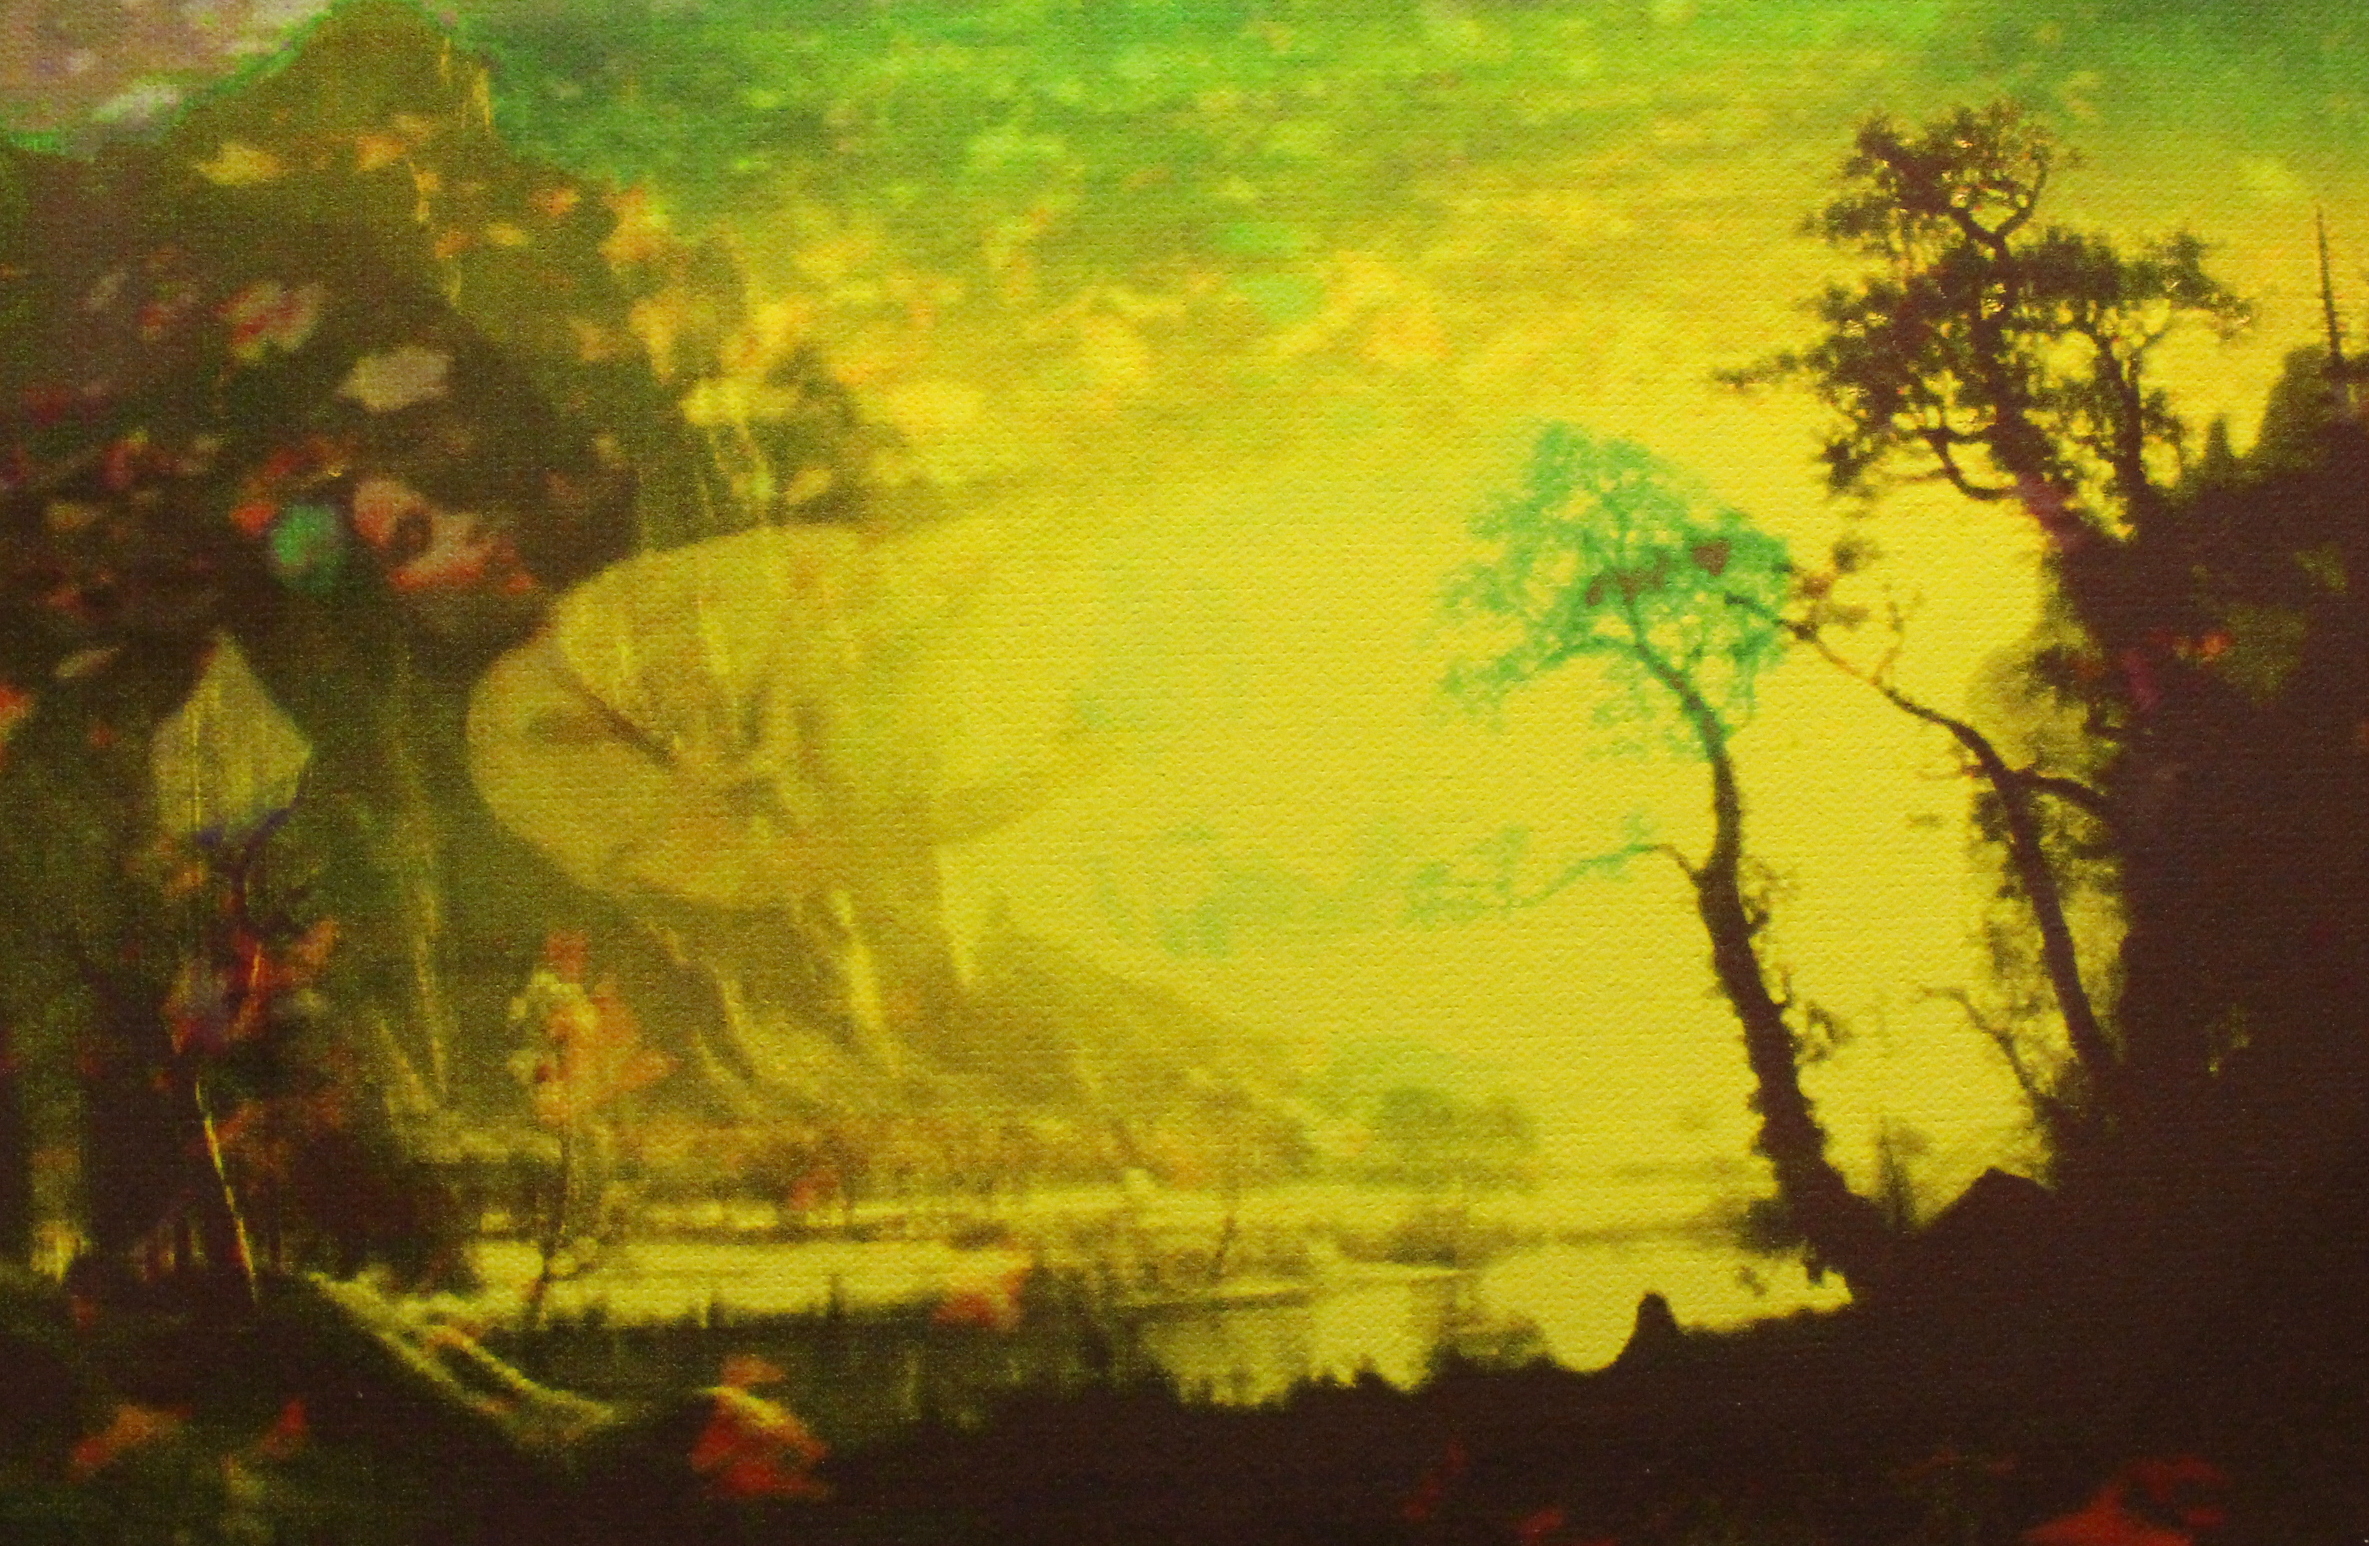 Annelies Štrba, NYIMA 534, 2012
Pigment print on canvas, mixed media
20 x 30 cm
Unique